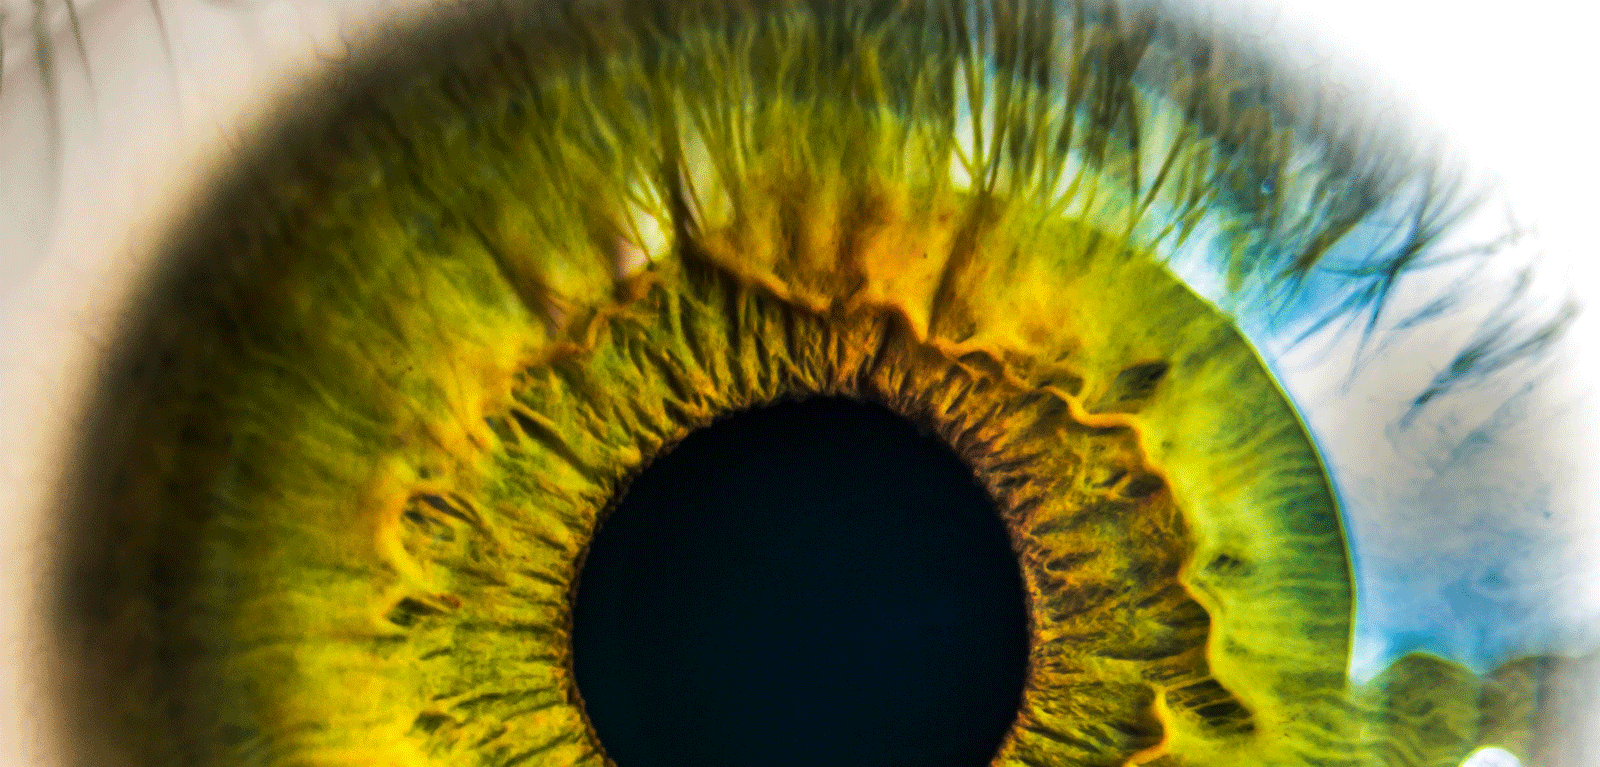 Close up of eye